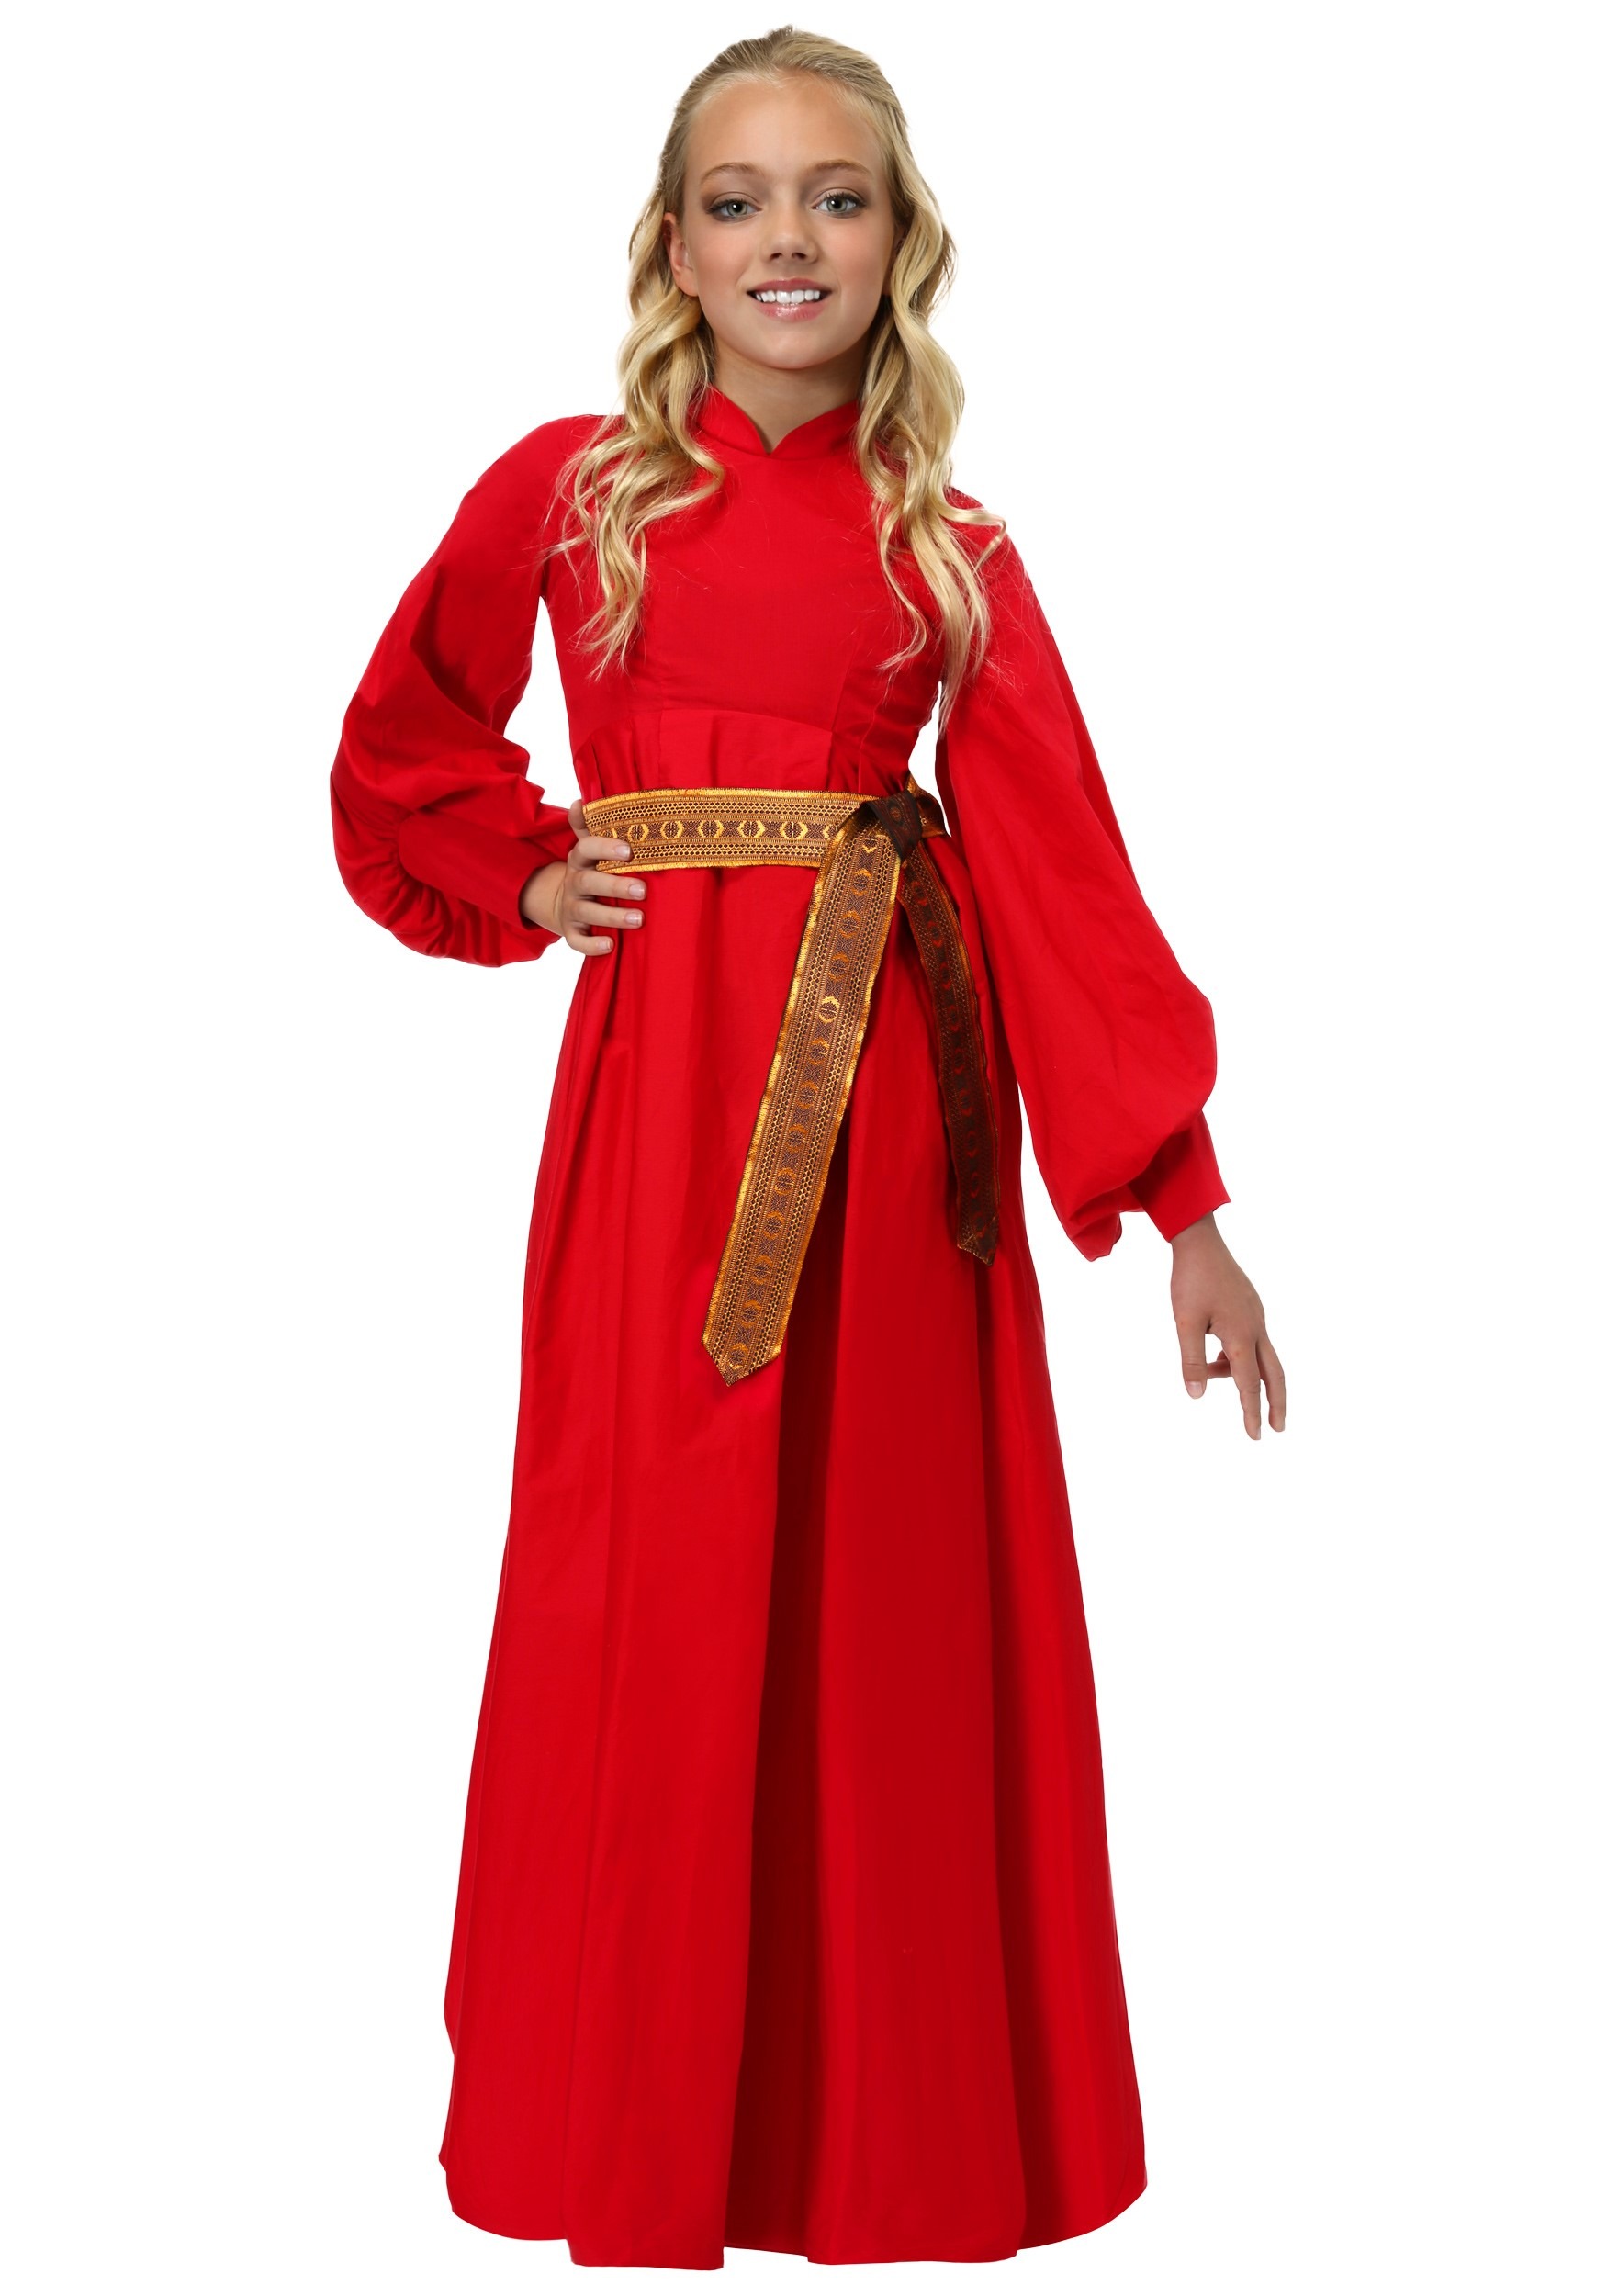 Photos - Fancy Dress Winsun Dress FUN Costumes Buttercup Peasant Dress Costume for Girls | Girl's Costumes R 